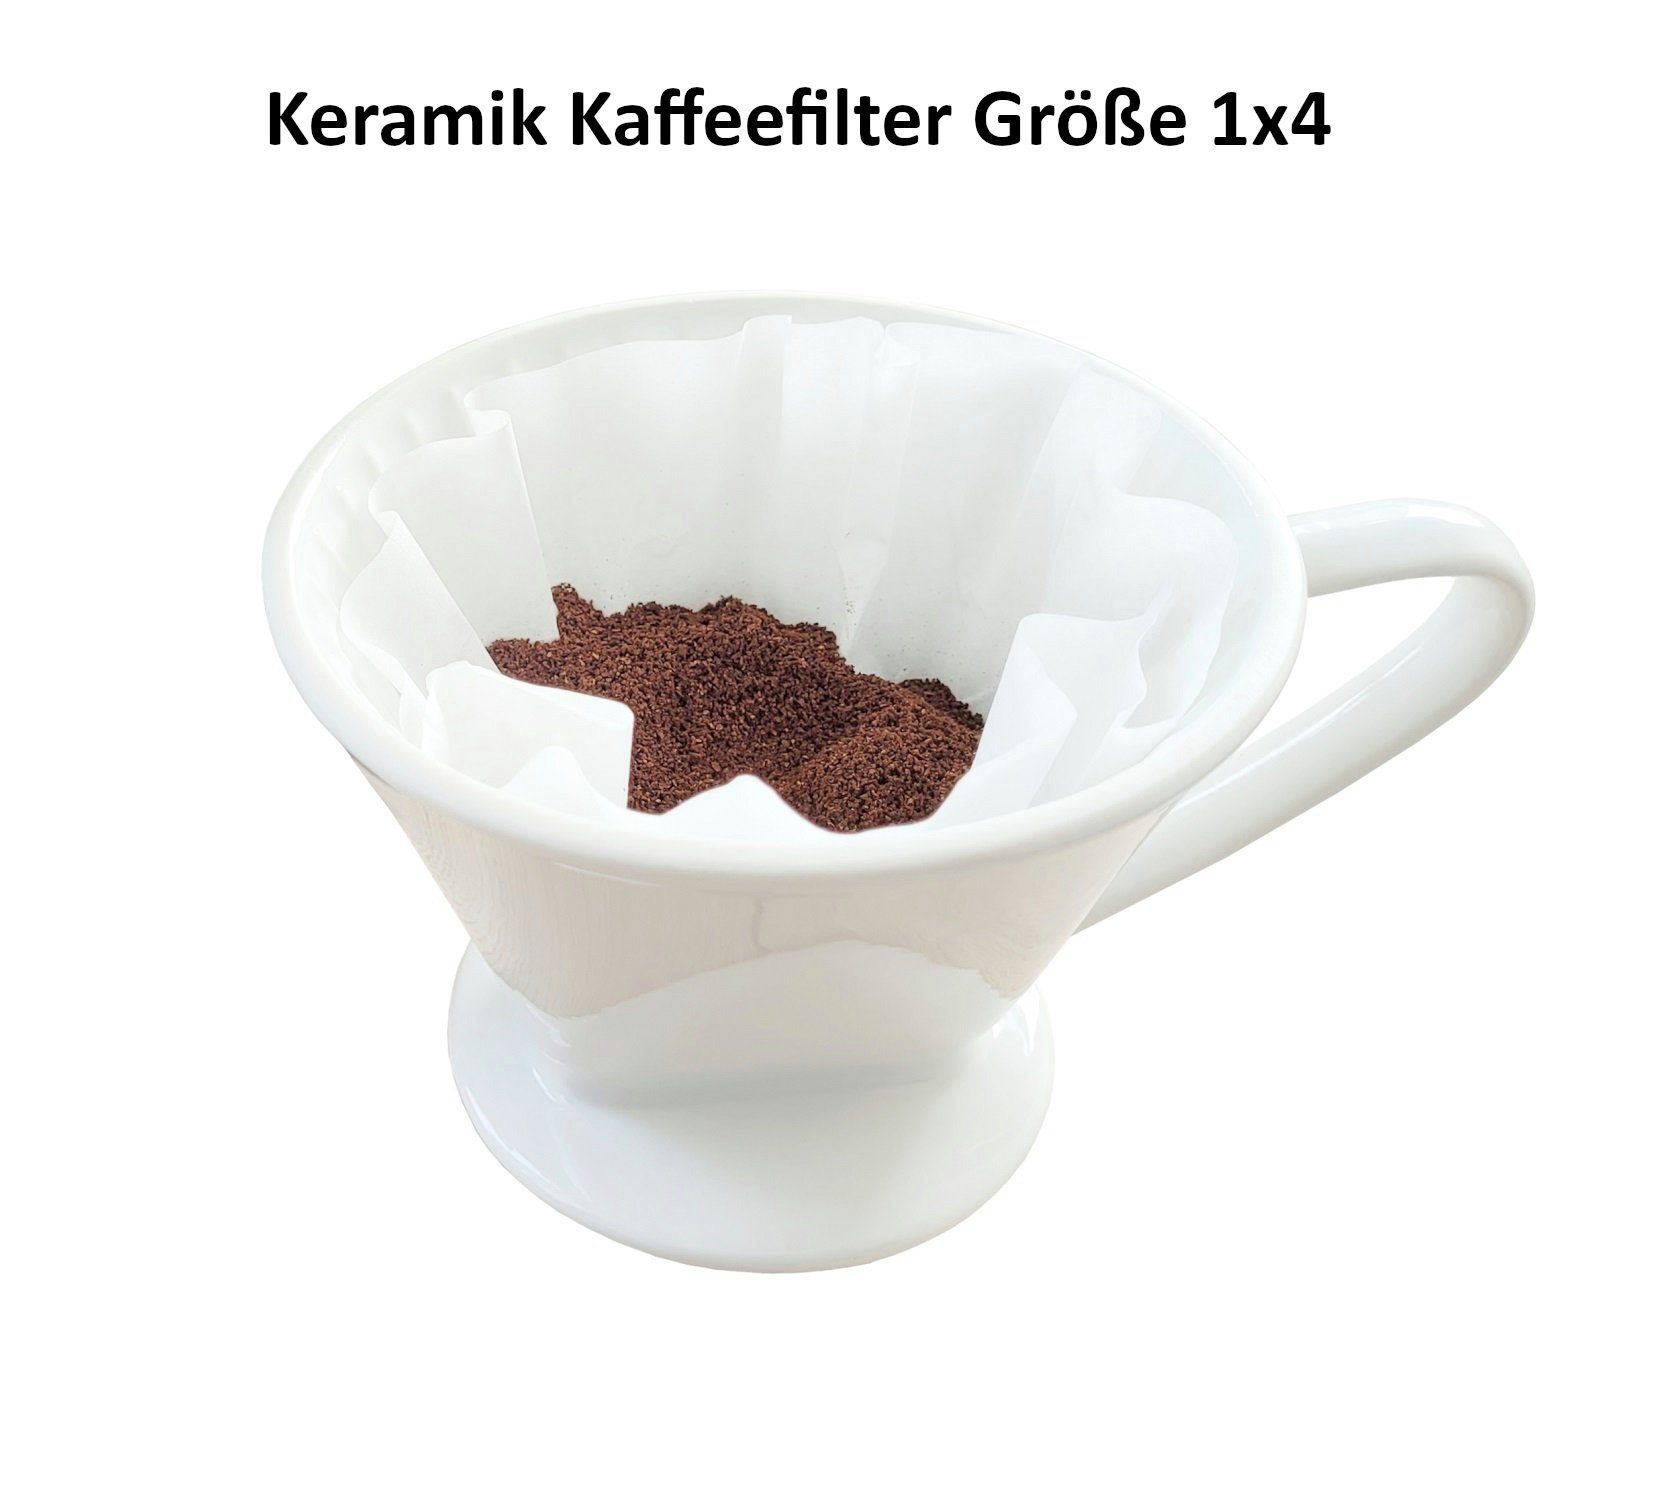 Provance Permanentfilter Kaffeefilter Keramikfilter Größe Keramik Filtertüten 4 für 1x4